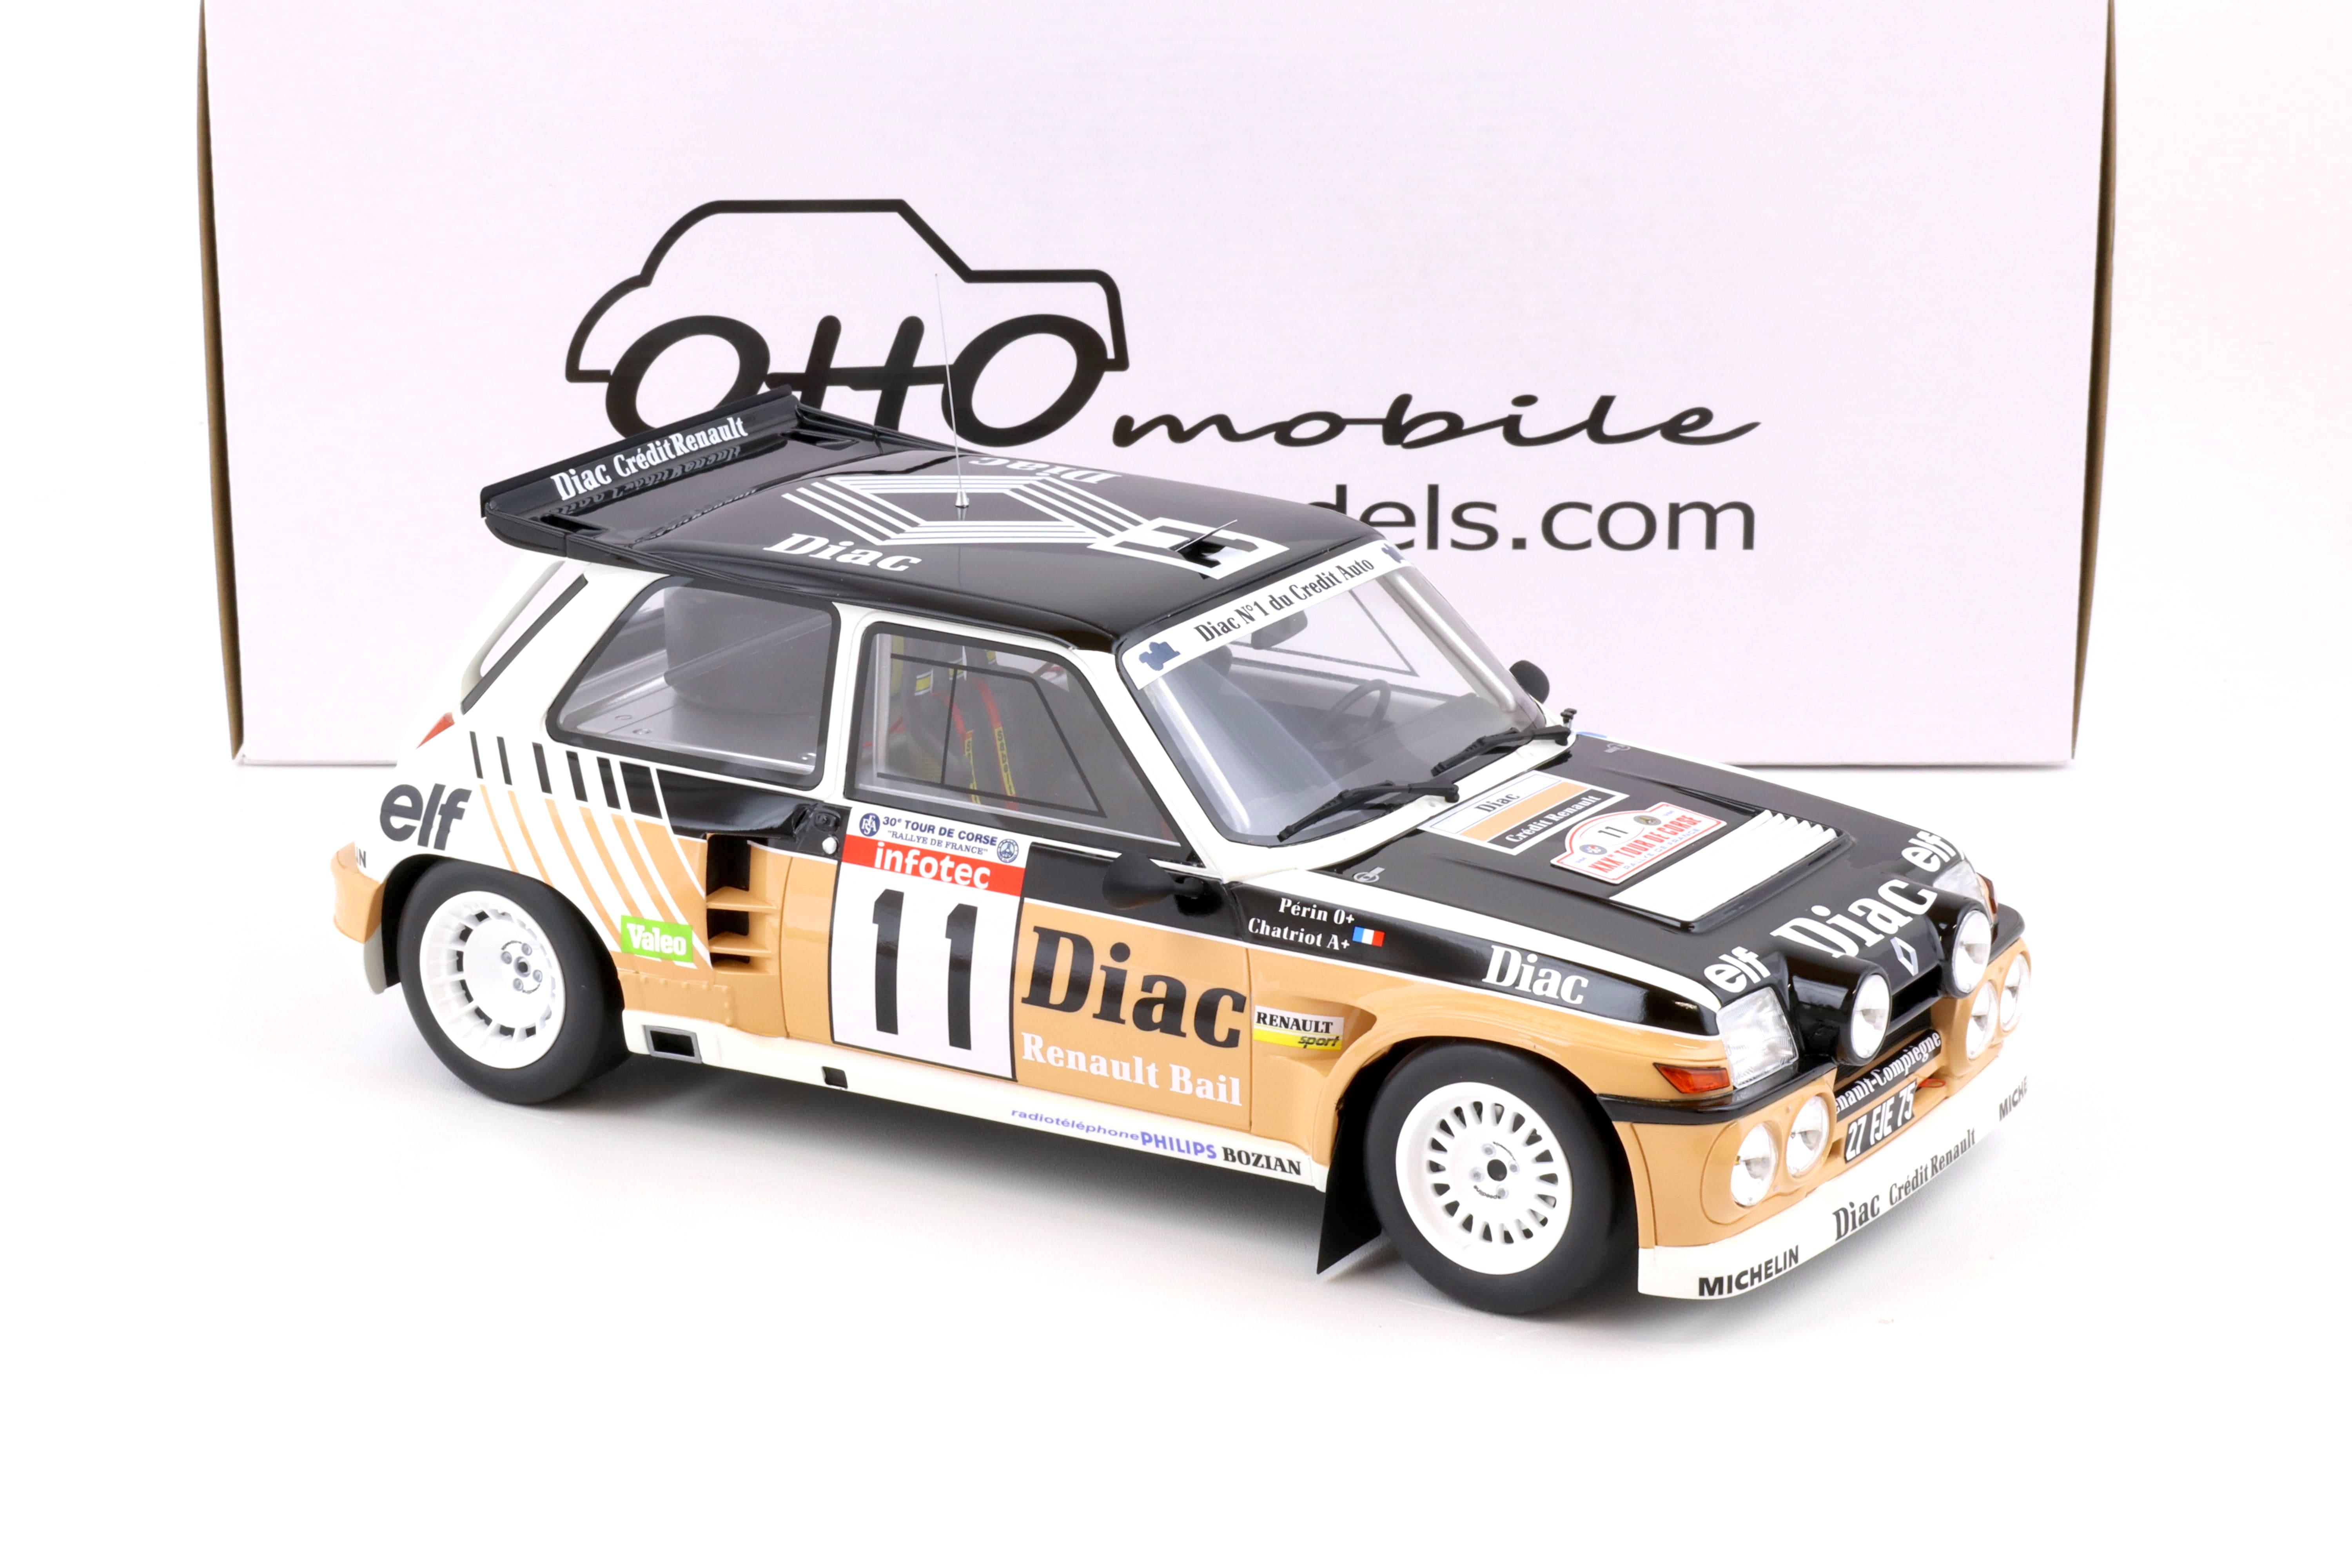 1:12 OTTO mobile G063 Renault Maxi 5 Turbo #11 Rallye Tour de Corse 1986 